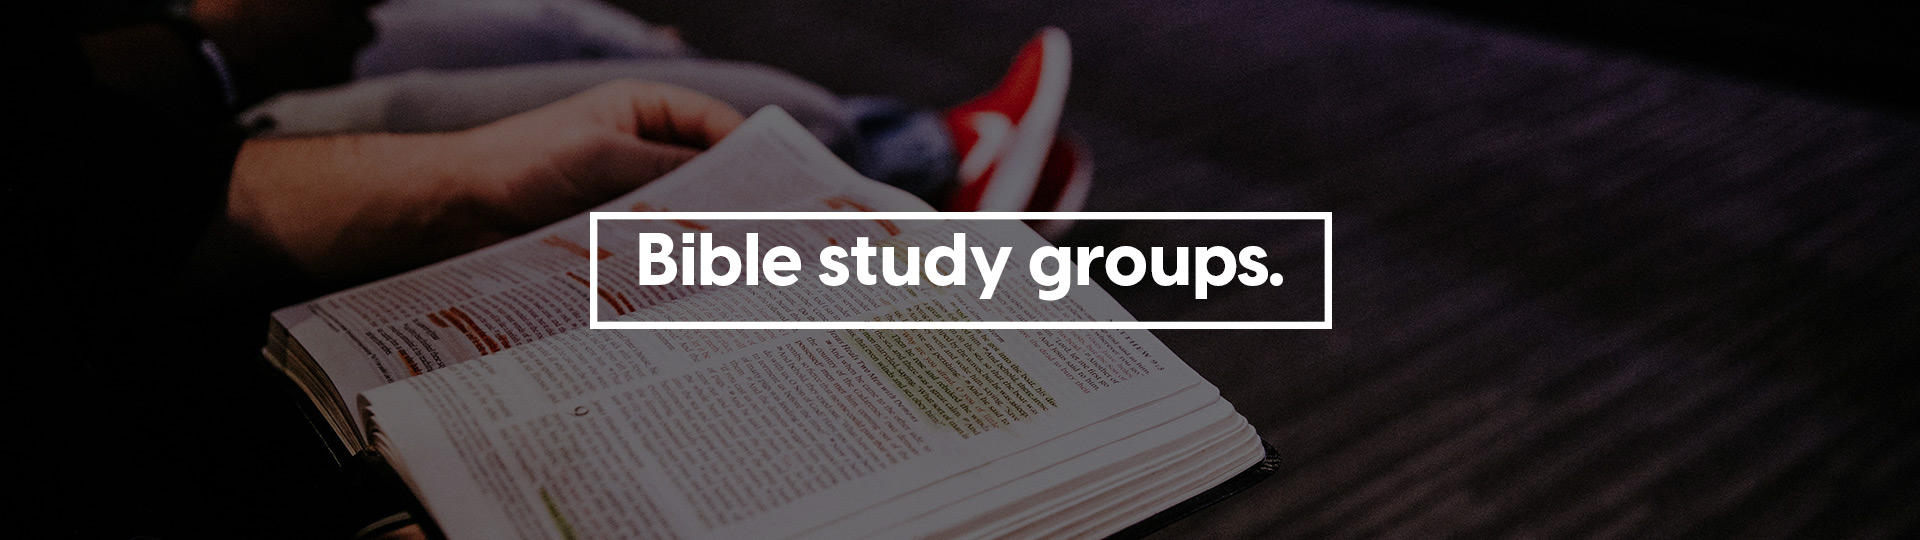 BibleStudyGroups